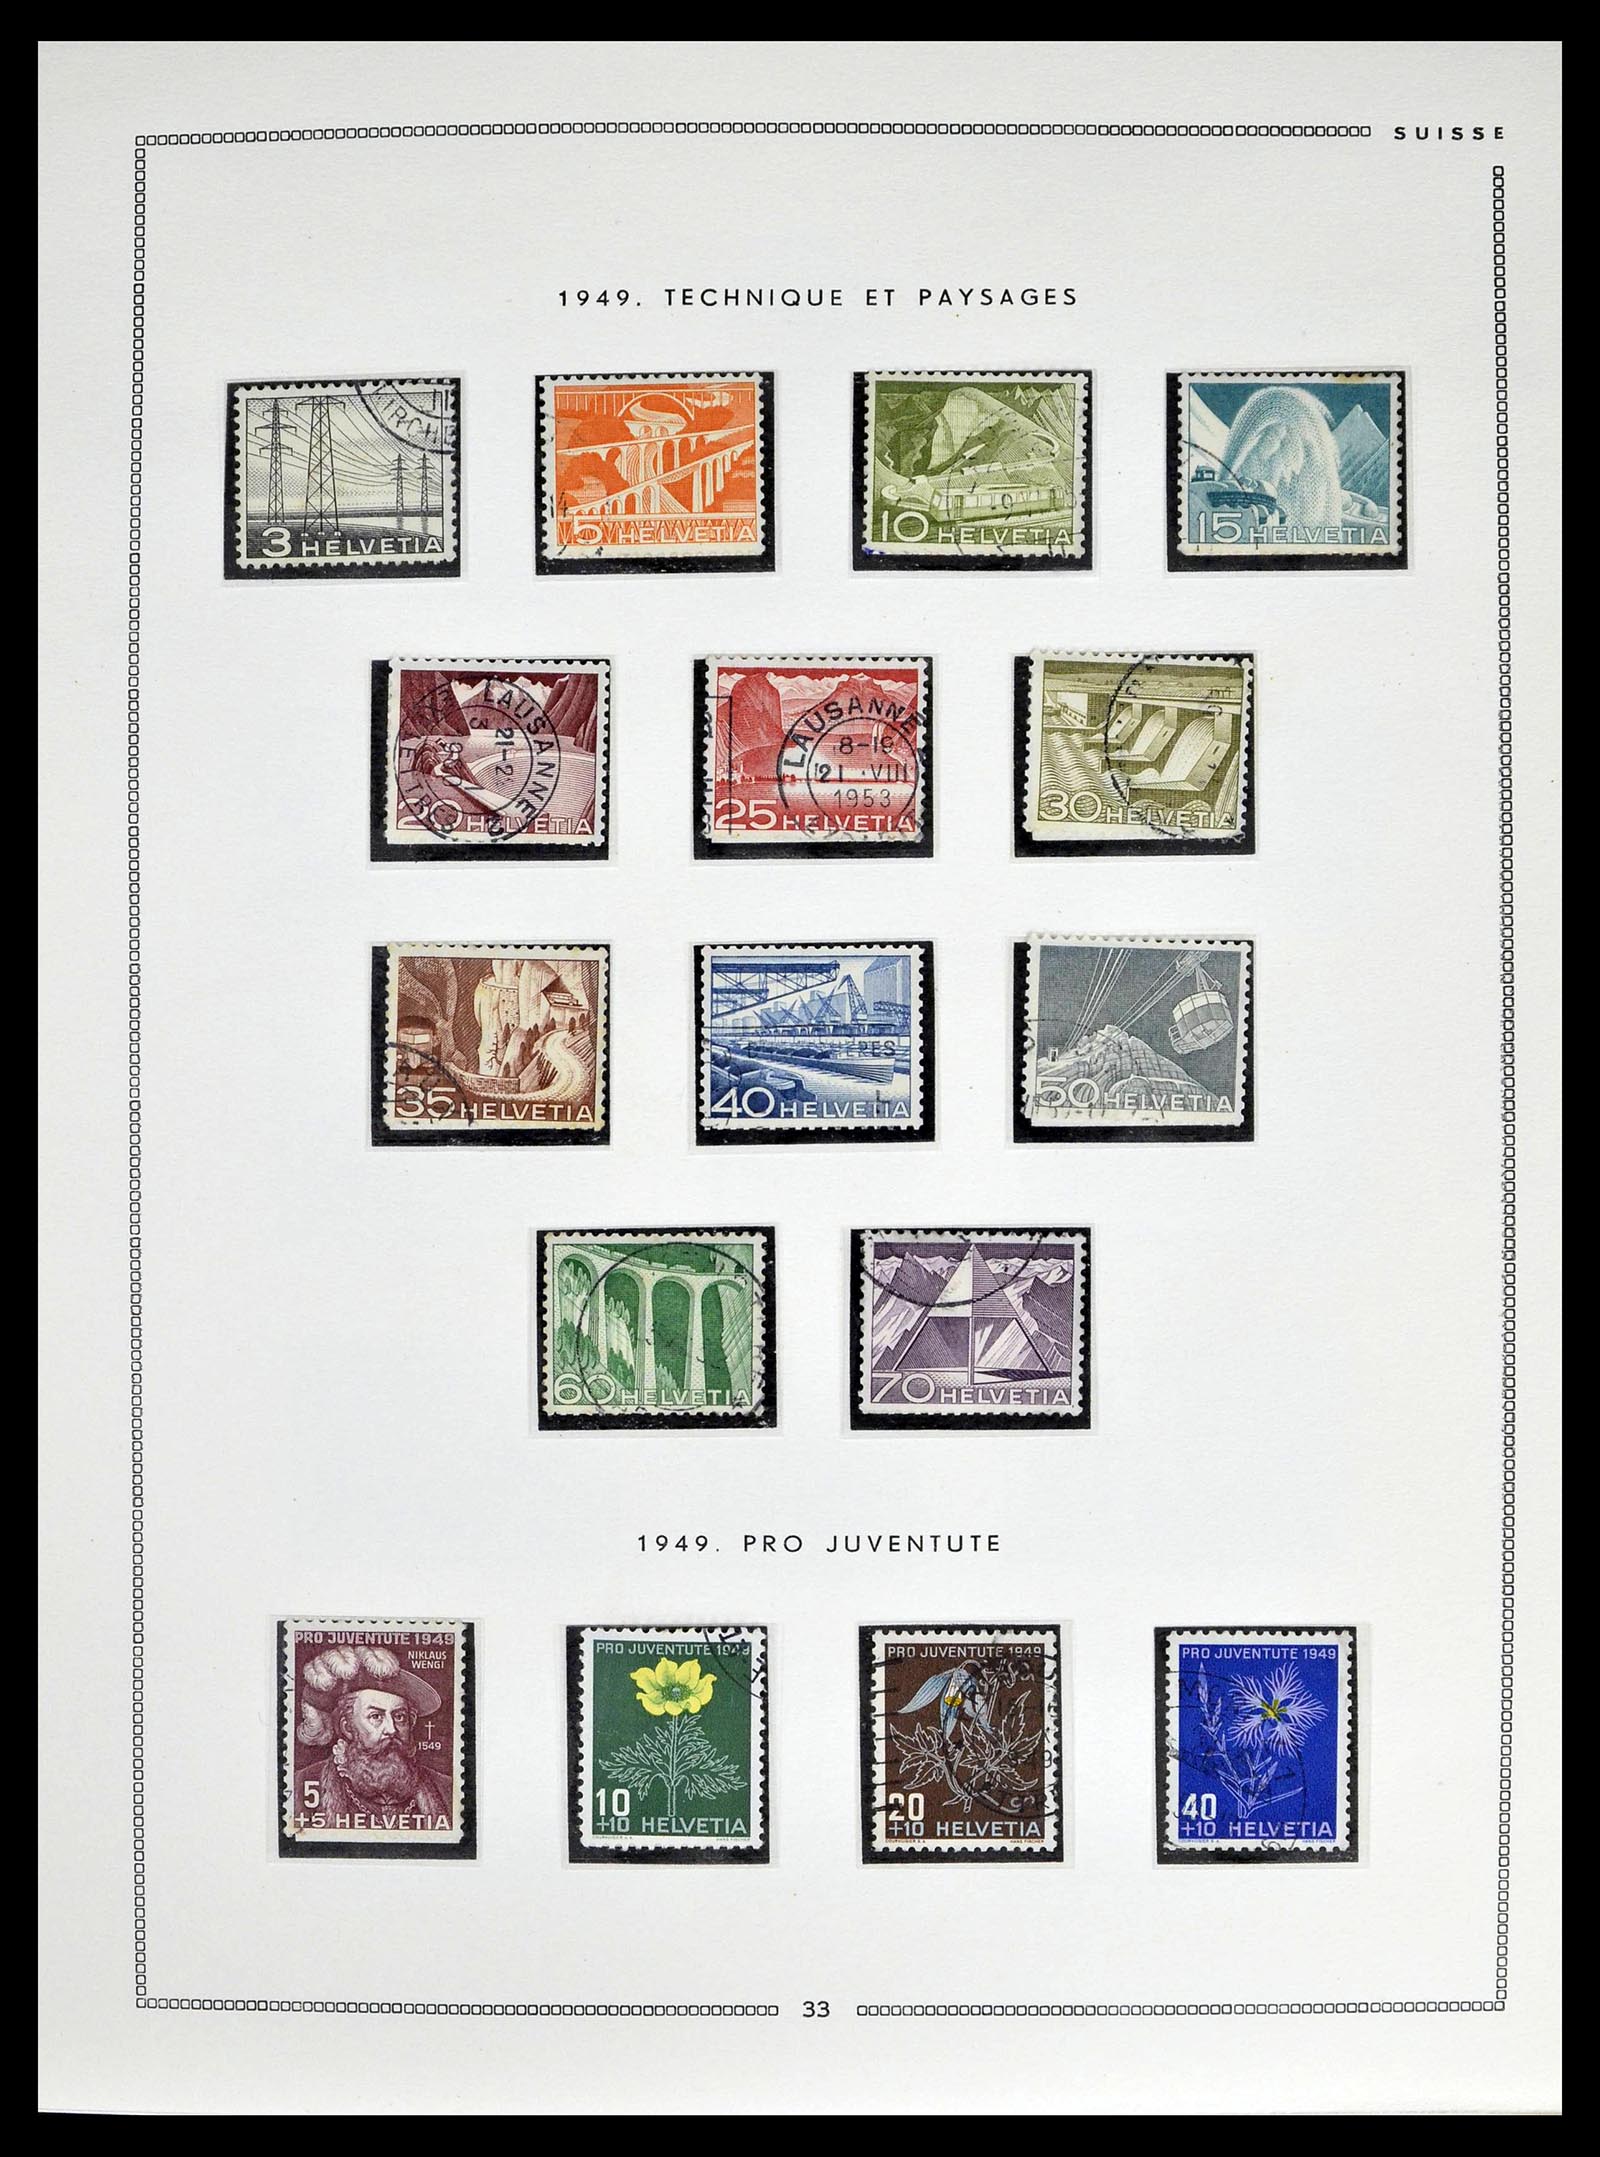 39094 0031 - Stamp collection 39094 Switzerland 1850-2005.